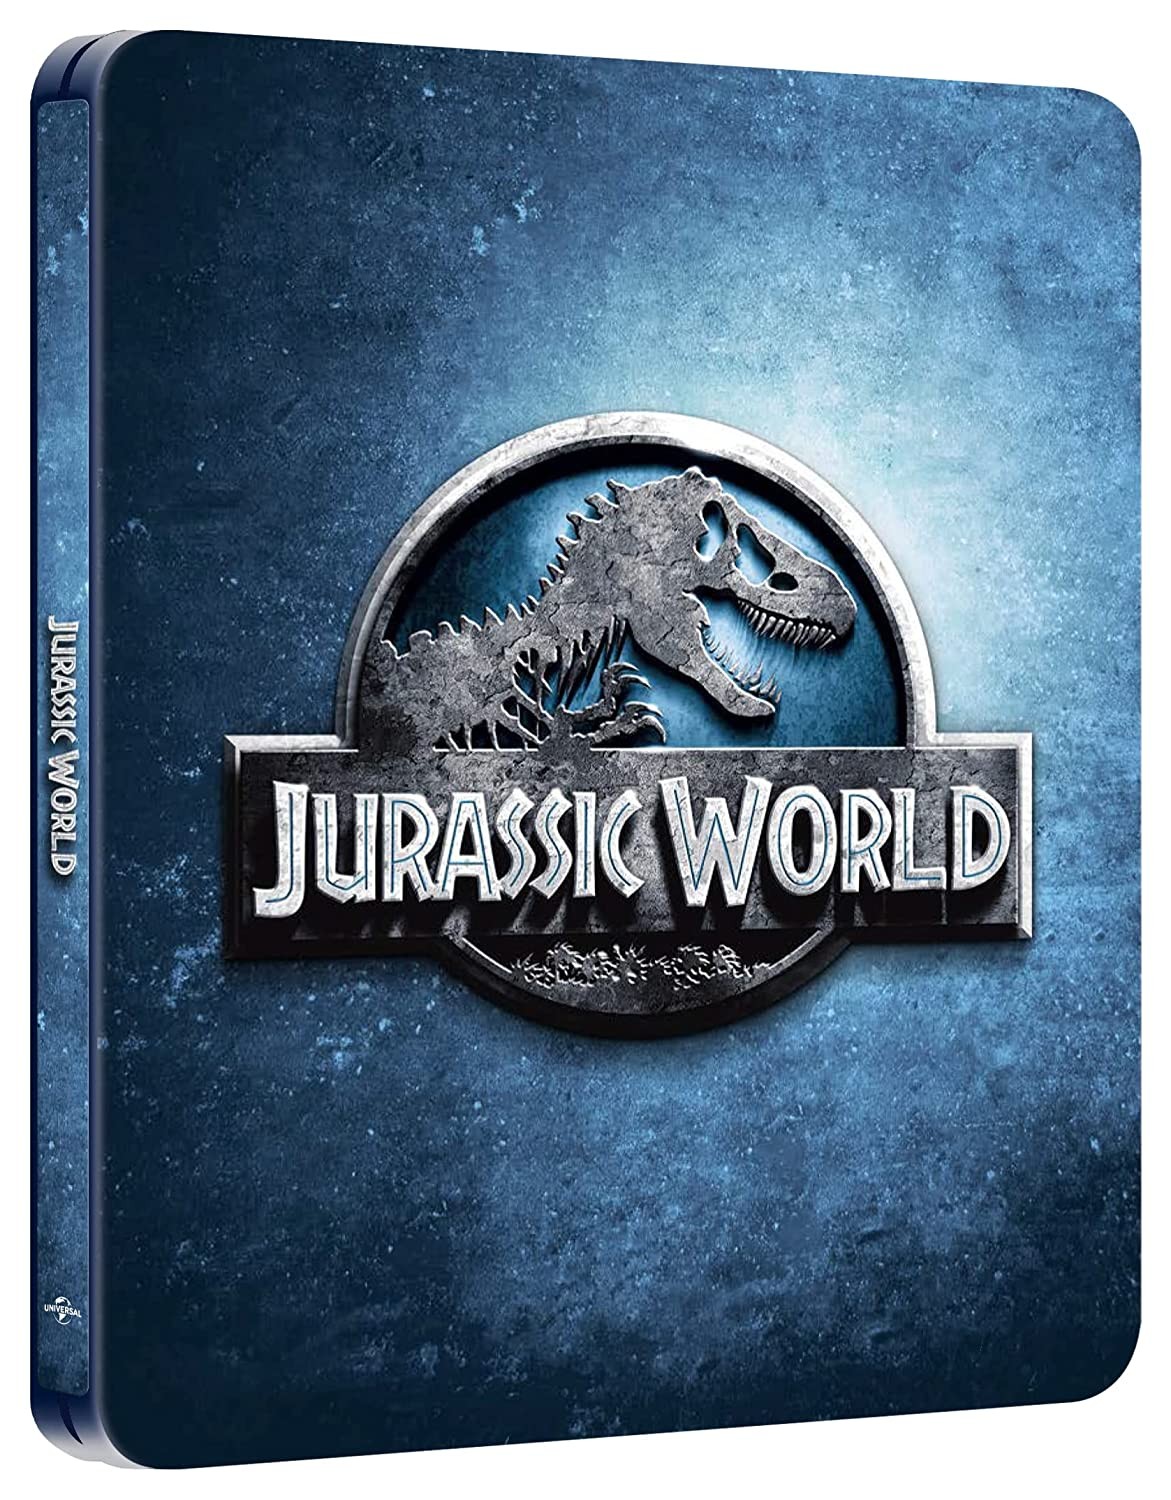 Jurassic World steelbook 4K UHD